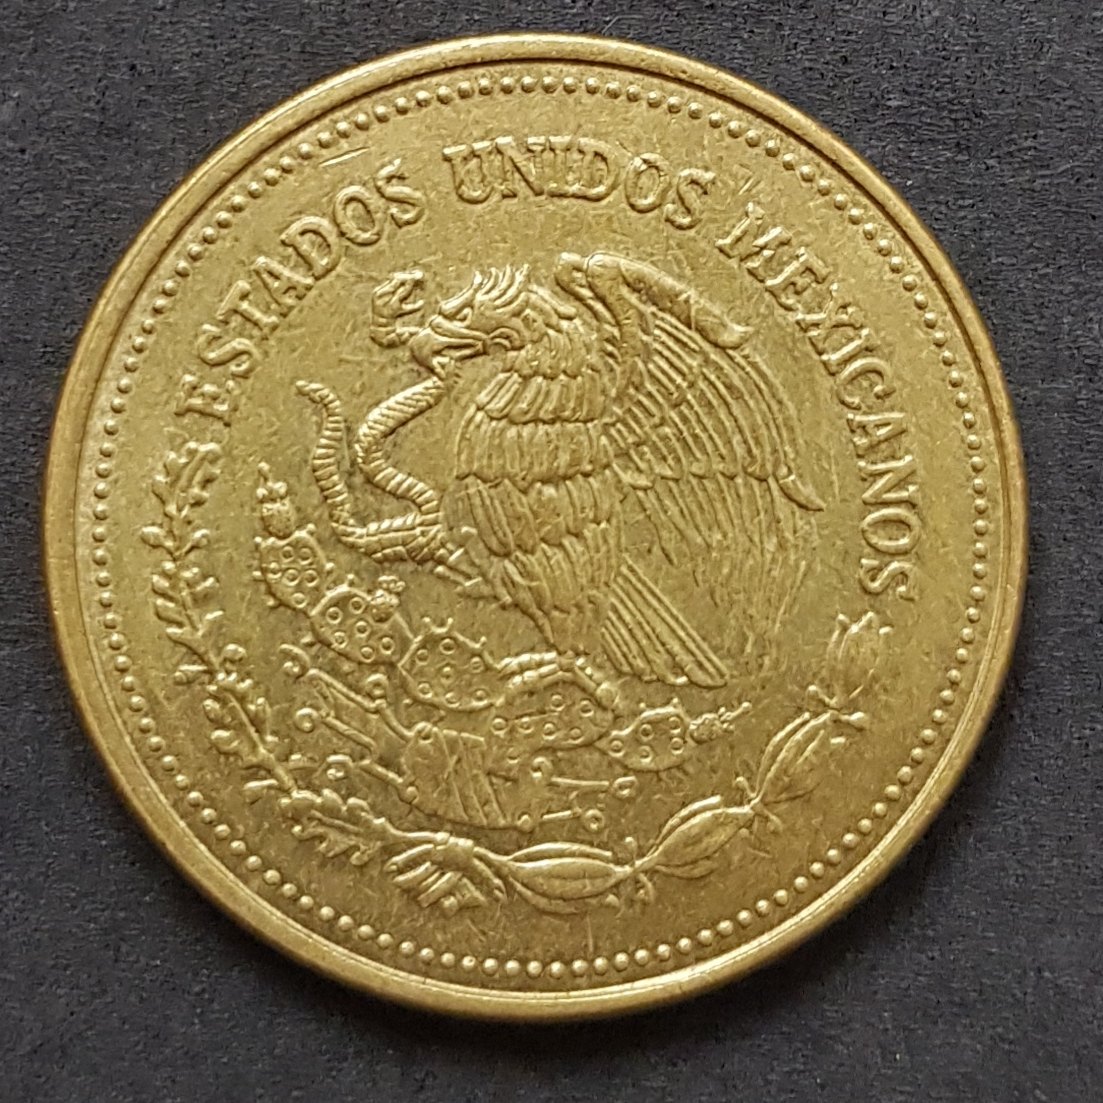  Mexiko 1000 Pesos 1990  #275   